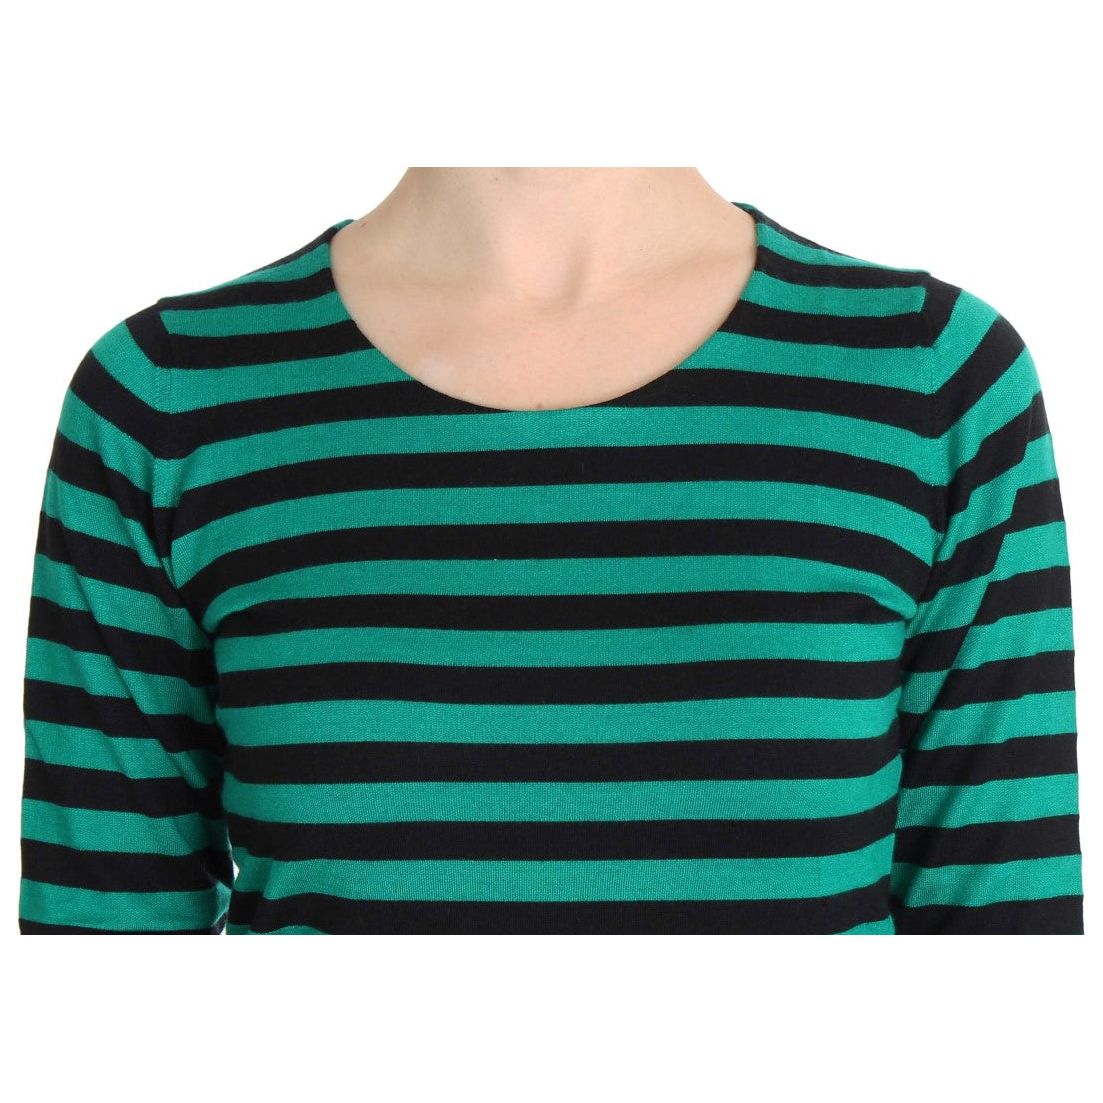 Dolce & Gabbana Elegant Striped Cashmere Silk Sweater green-black-silk-cashmere-sweater 178844-green-black-silk-cashmere-sweater-3.jpg